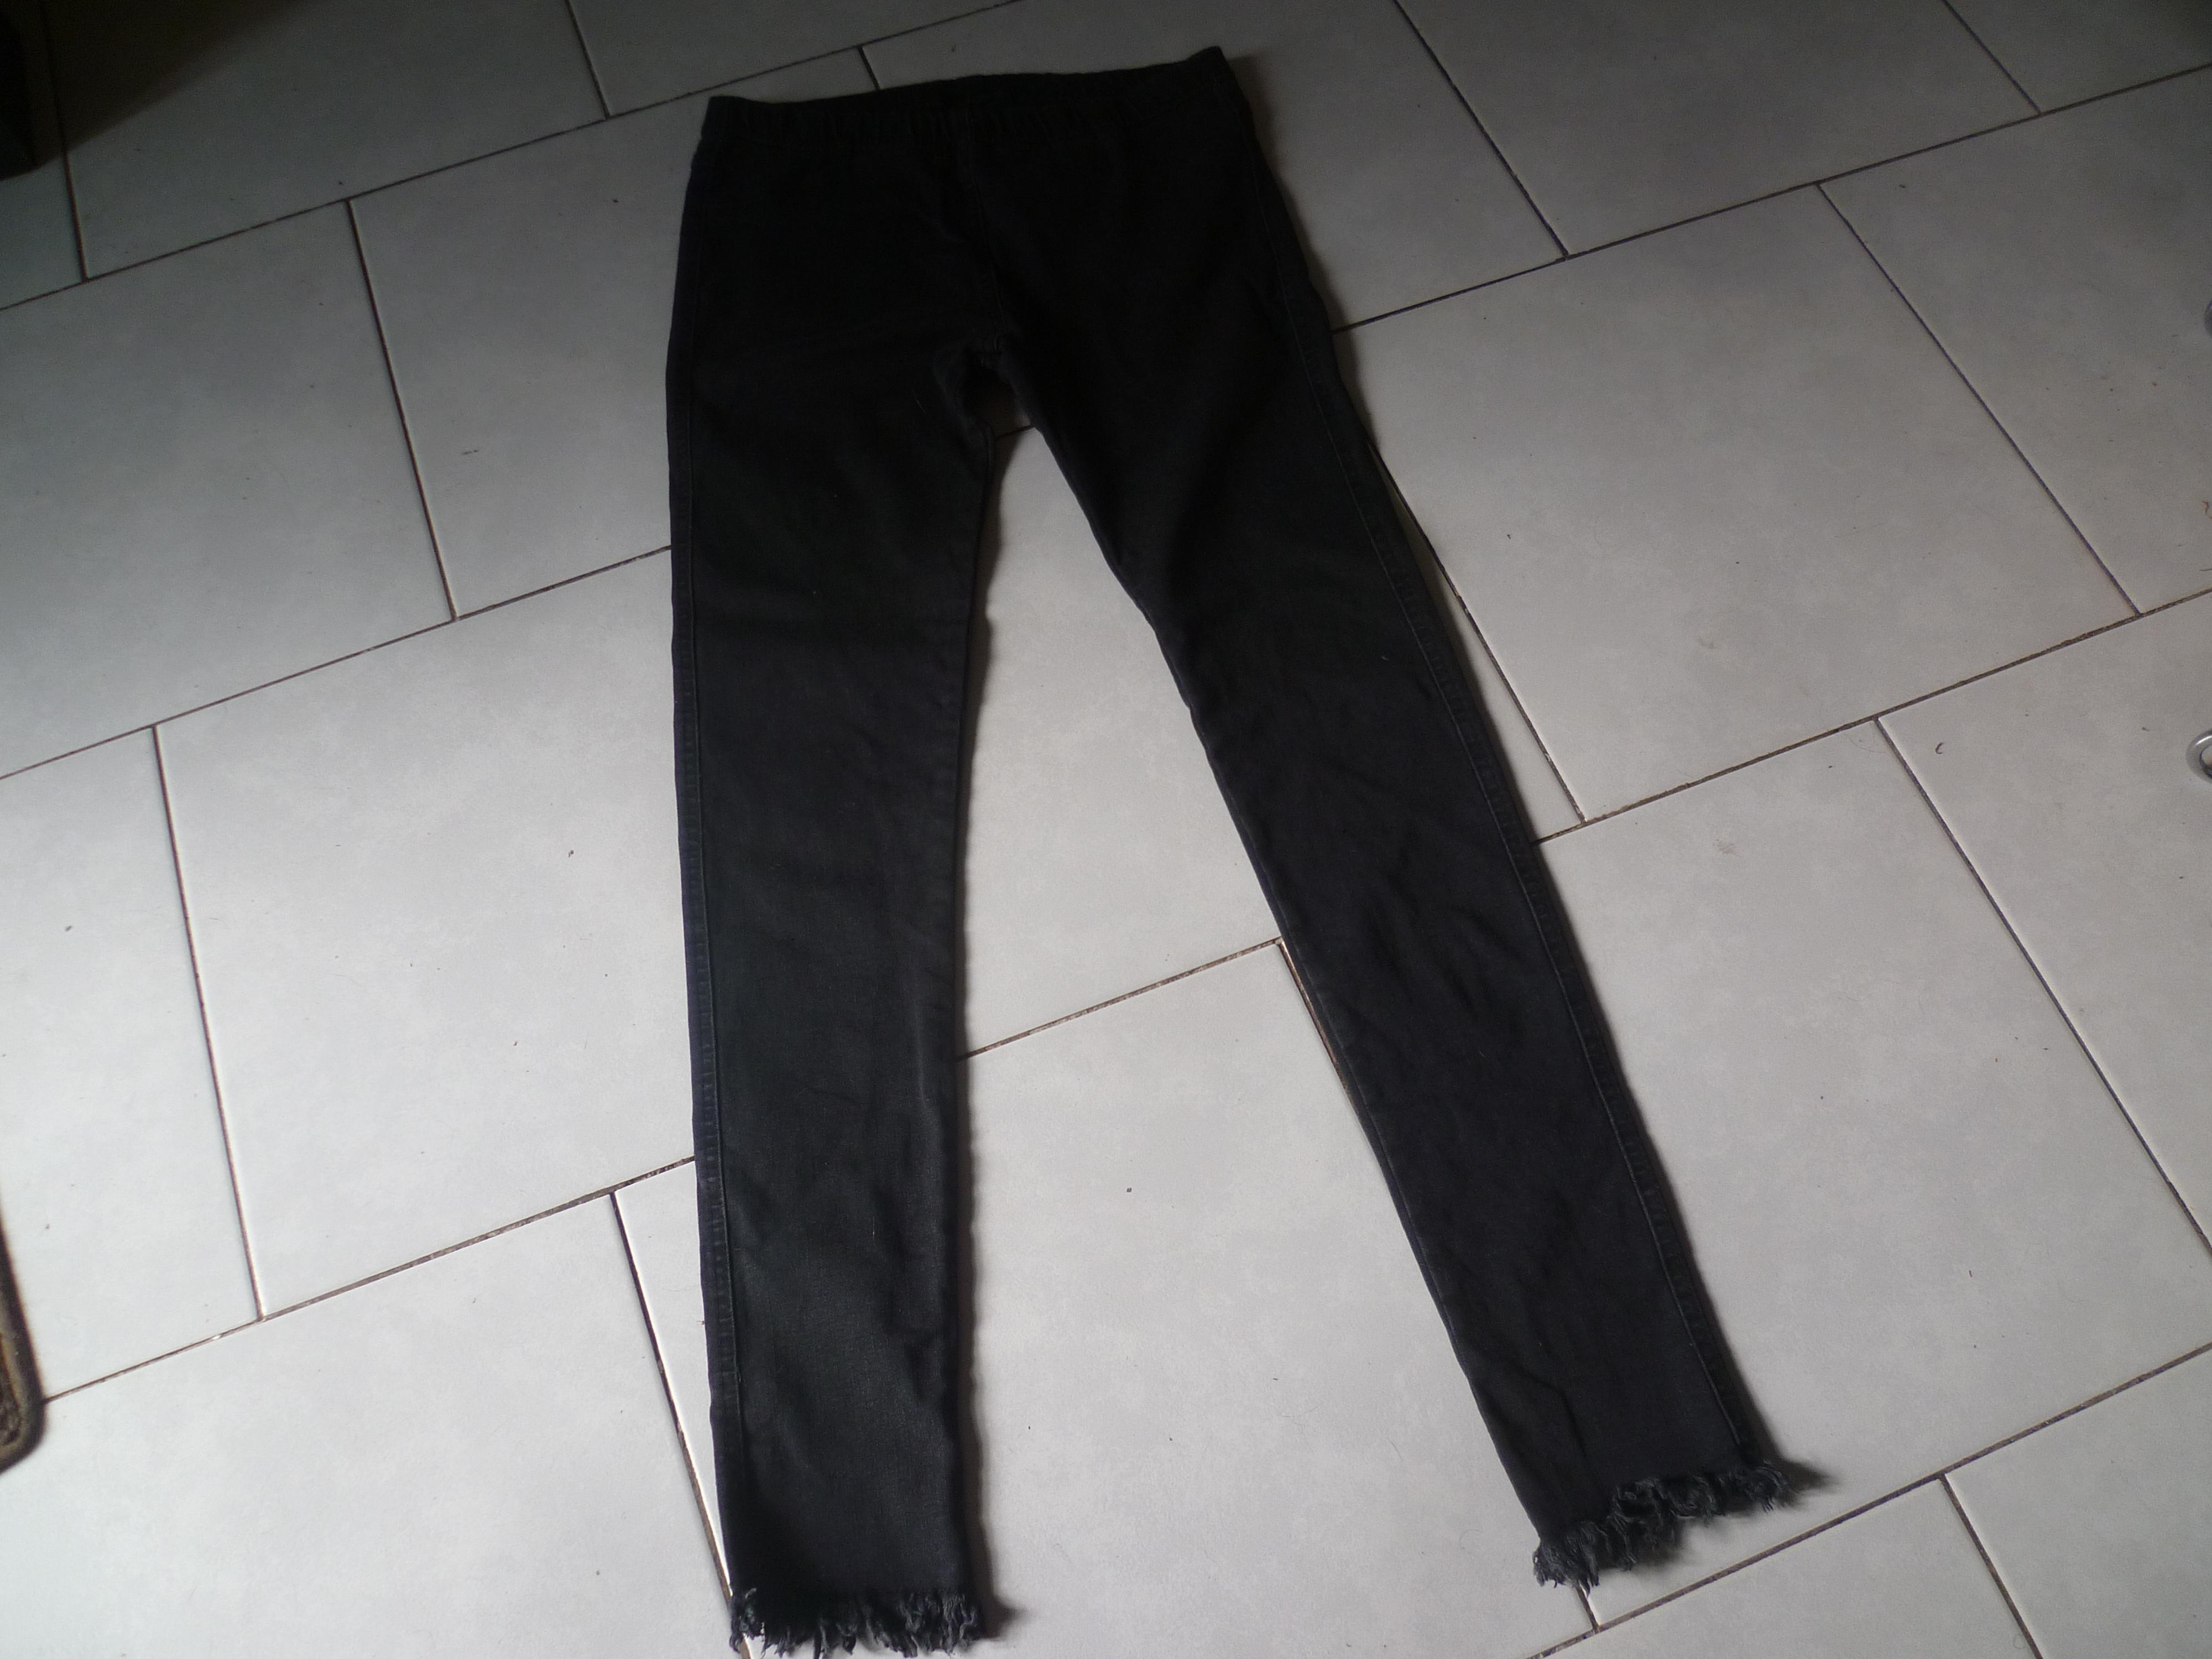 troc de troc jean noir - legging image 1